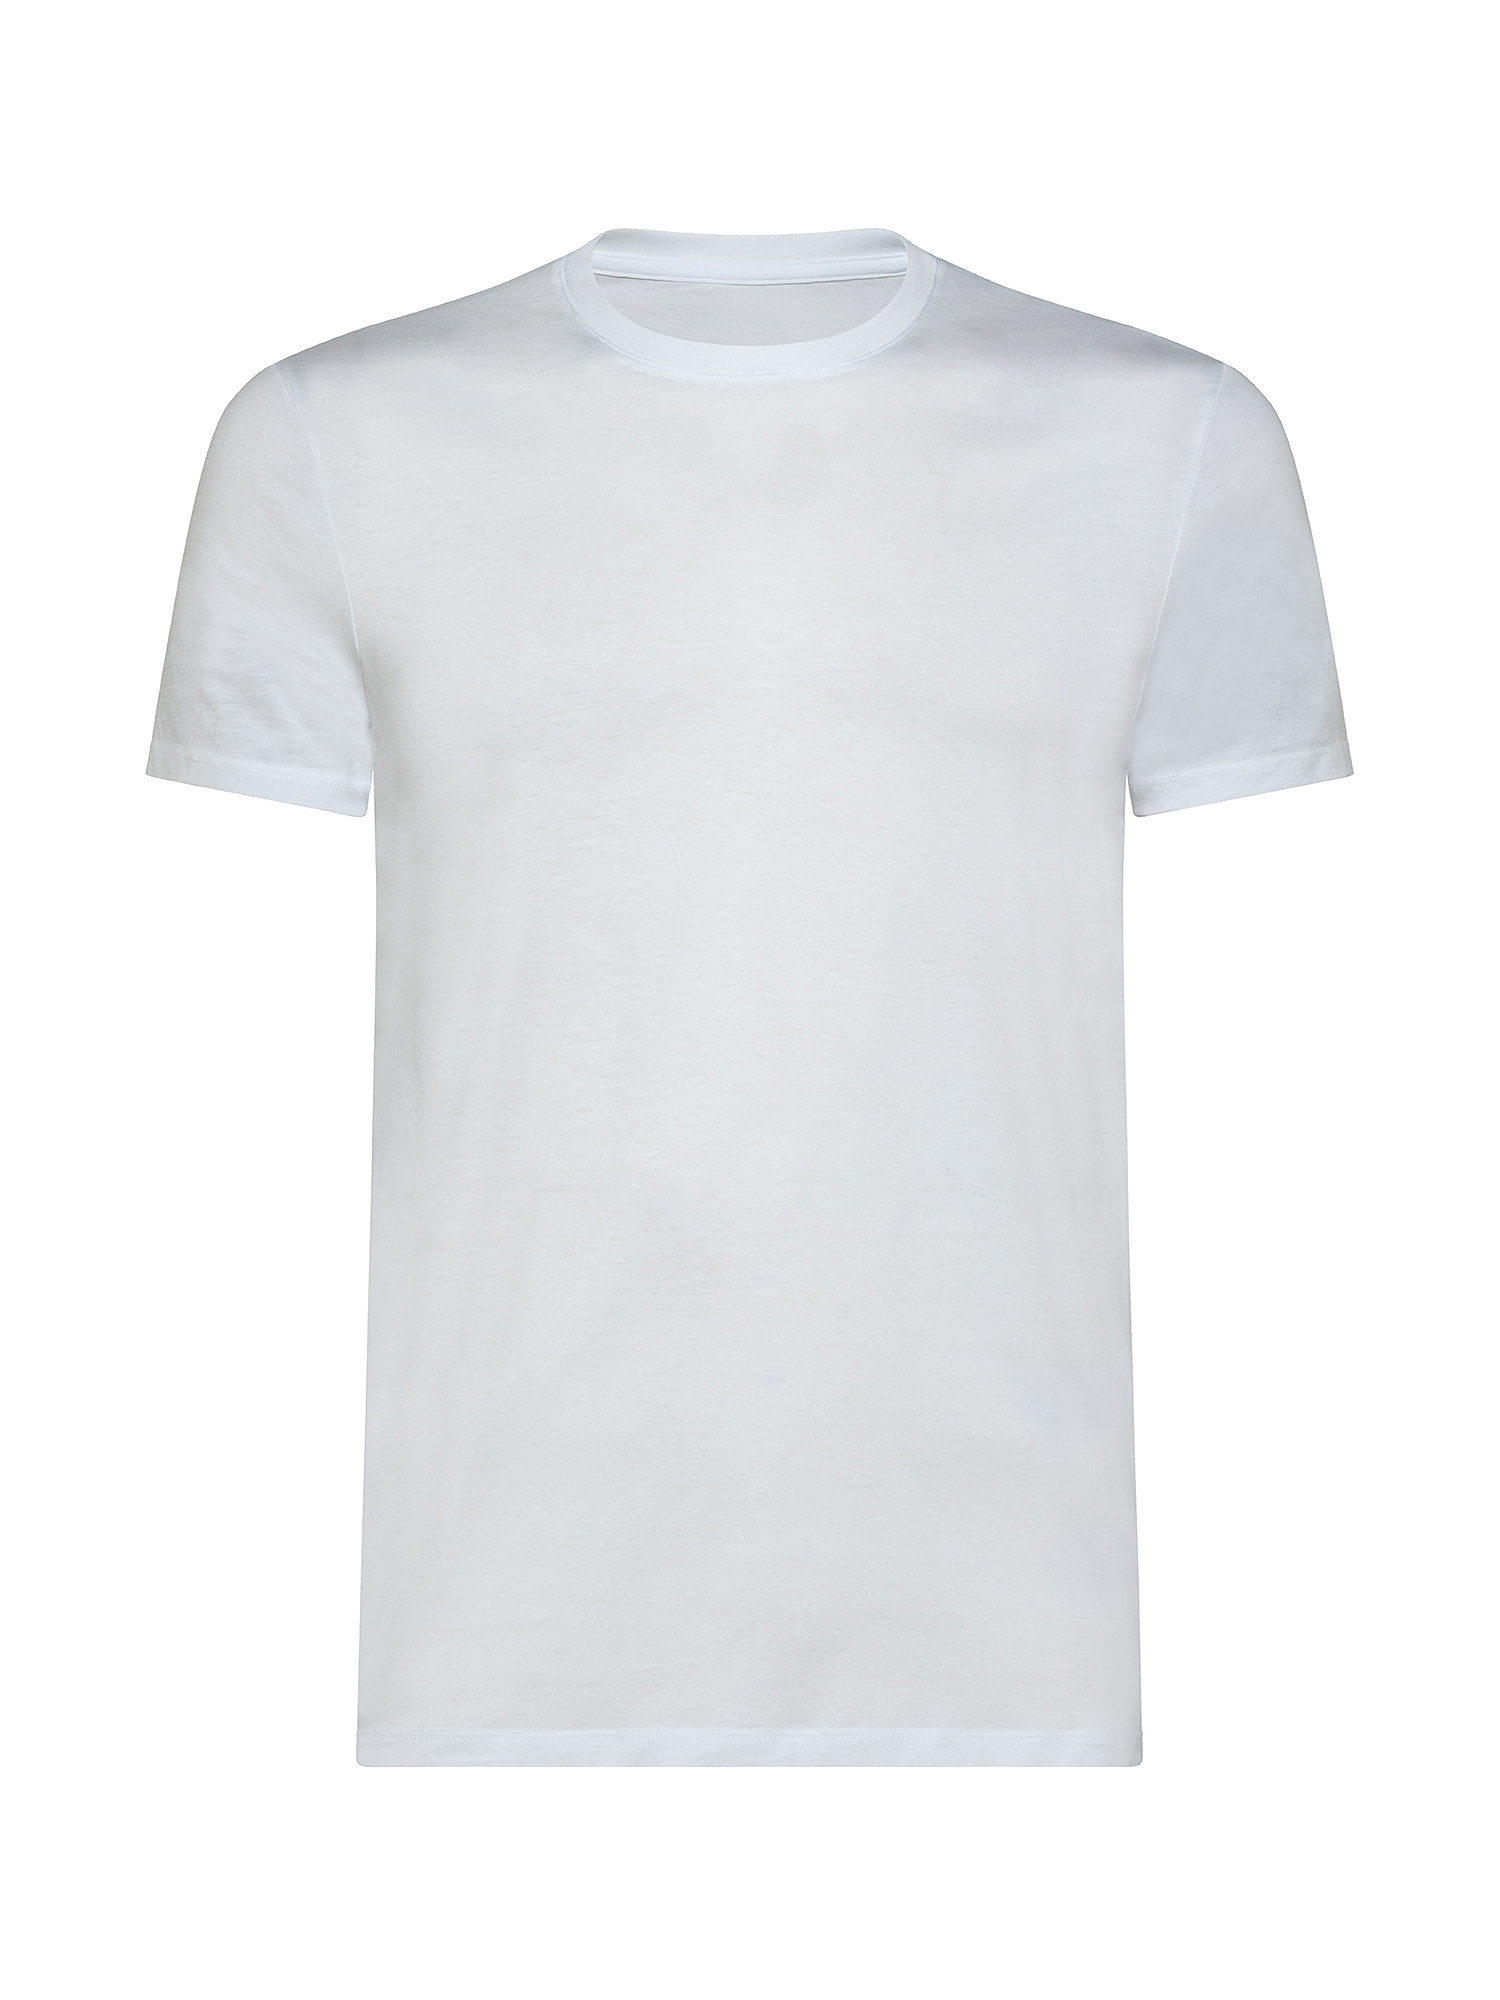 T-shirt, White, large image number 0